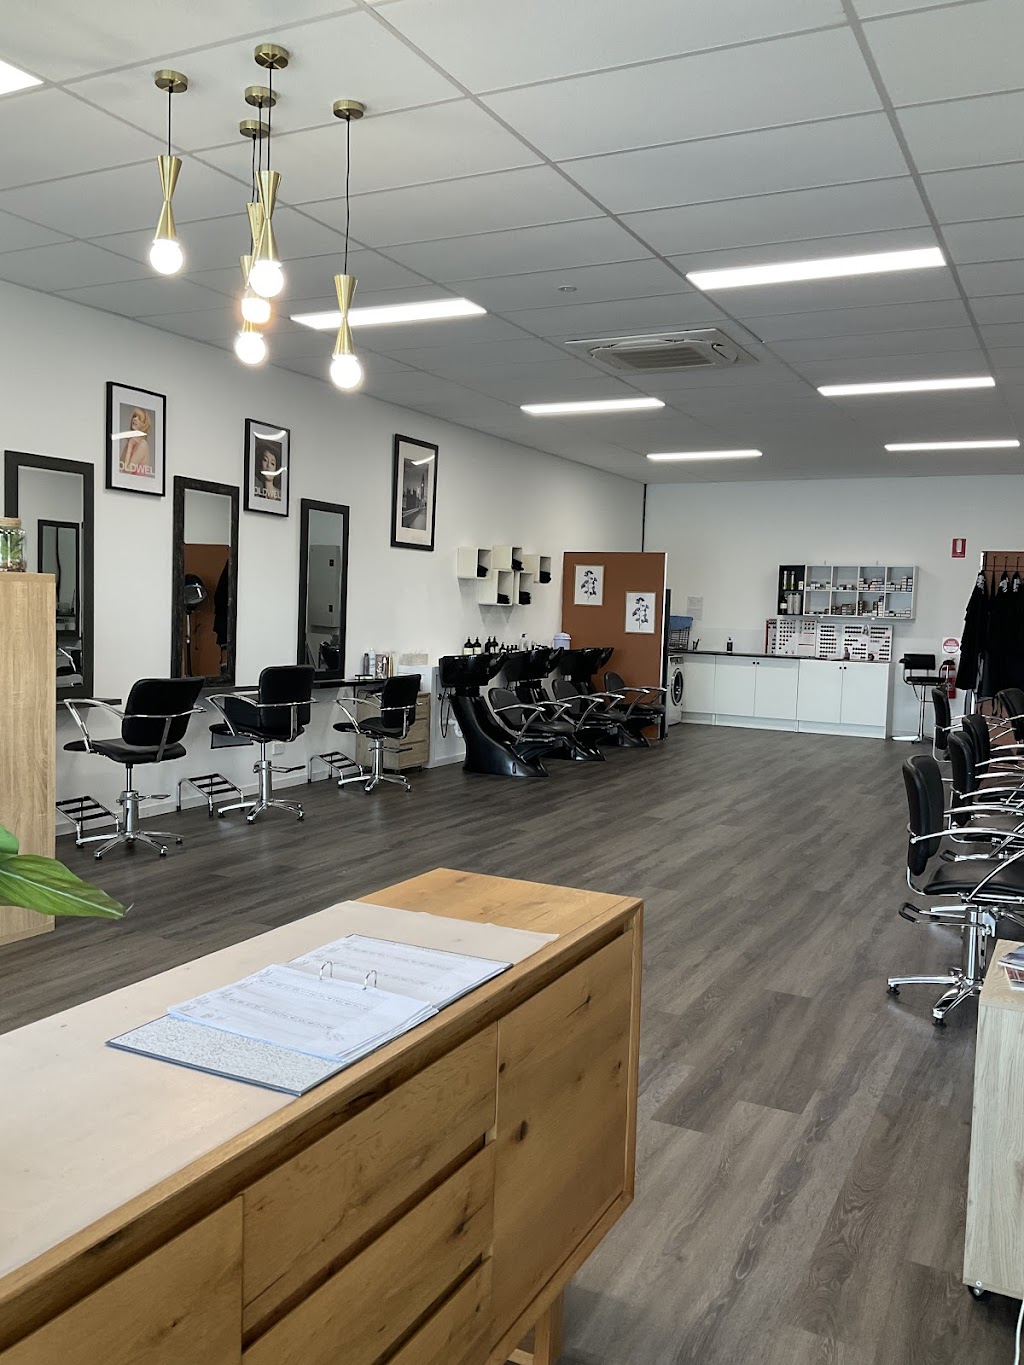 Savanna Hair Design | hair care | Shop 3 Edens Village, 14 Sunbird Dr, Redbank Plains QLD 4301, Australia | 0483861028 OR +61 483 861 028